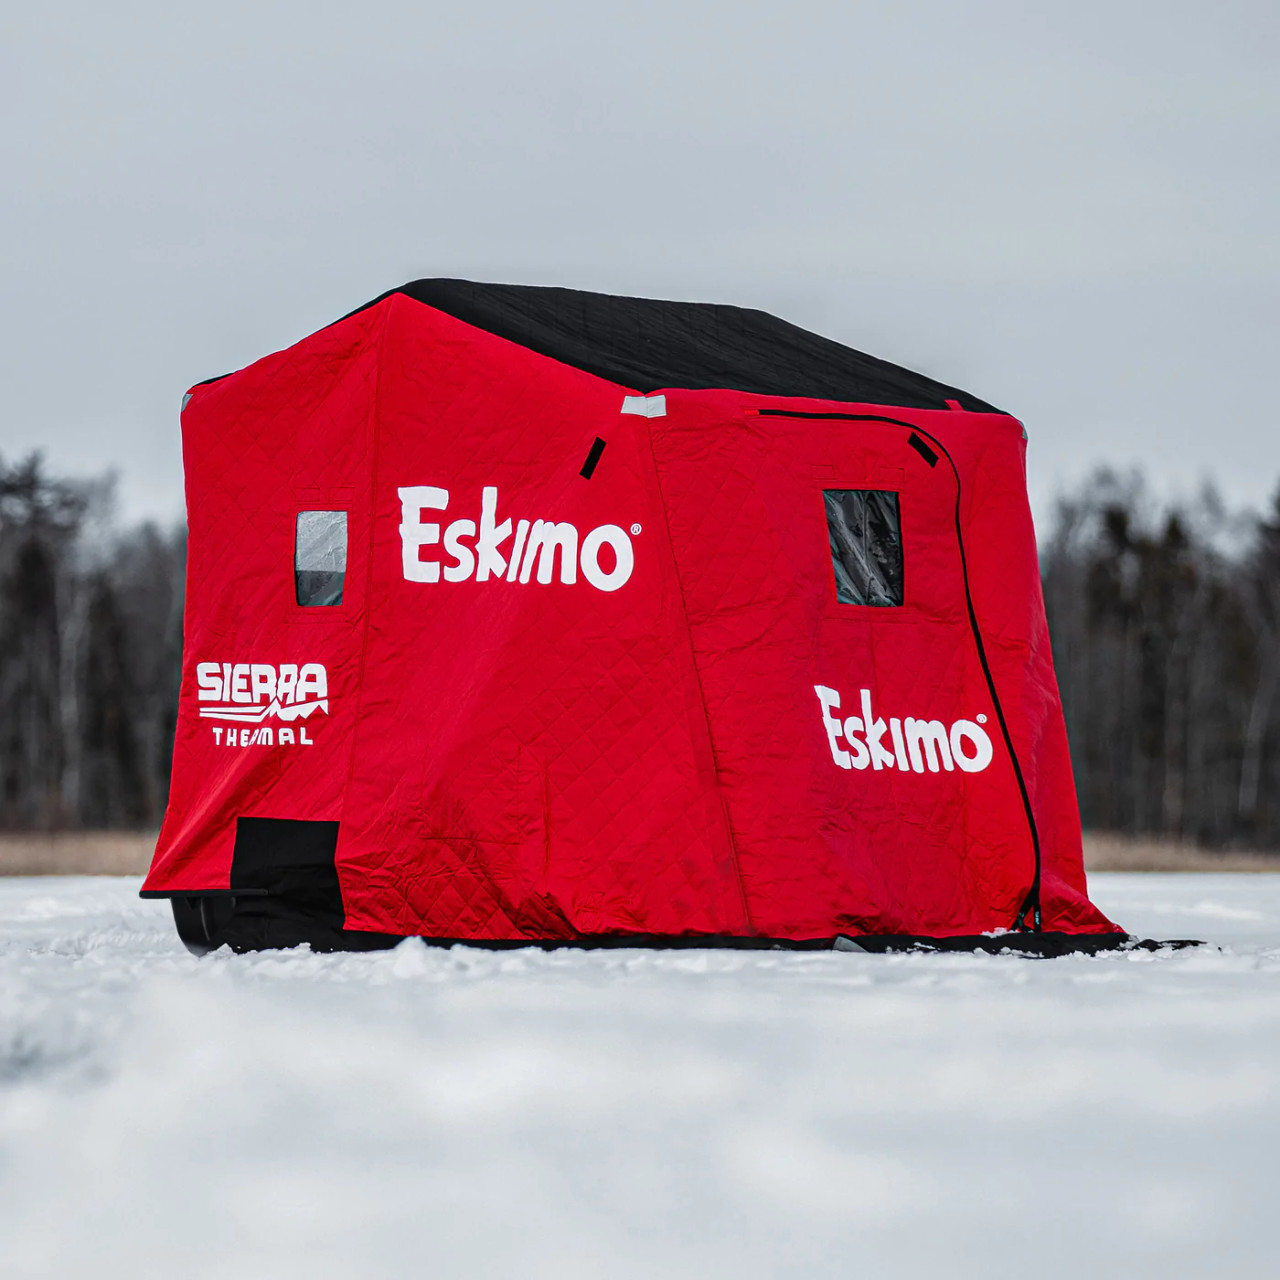 The Eskimo Versa Chair is - Eskimo Ice Fishing Gear